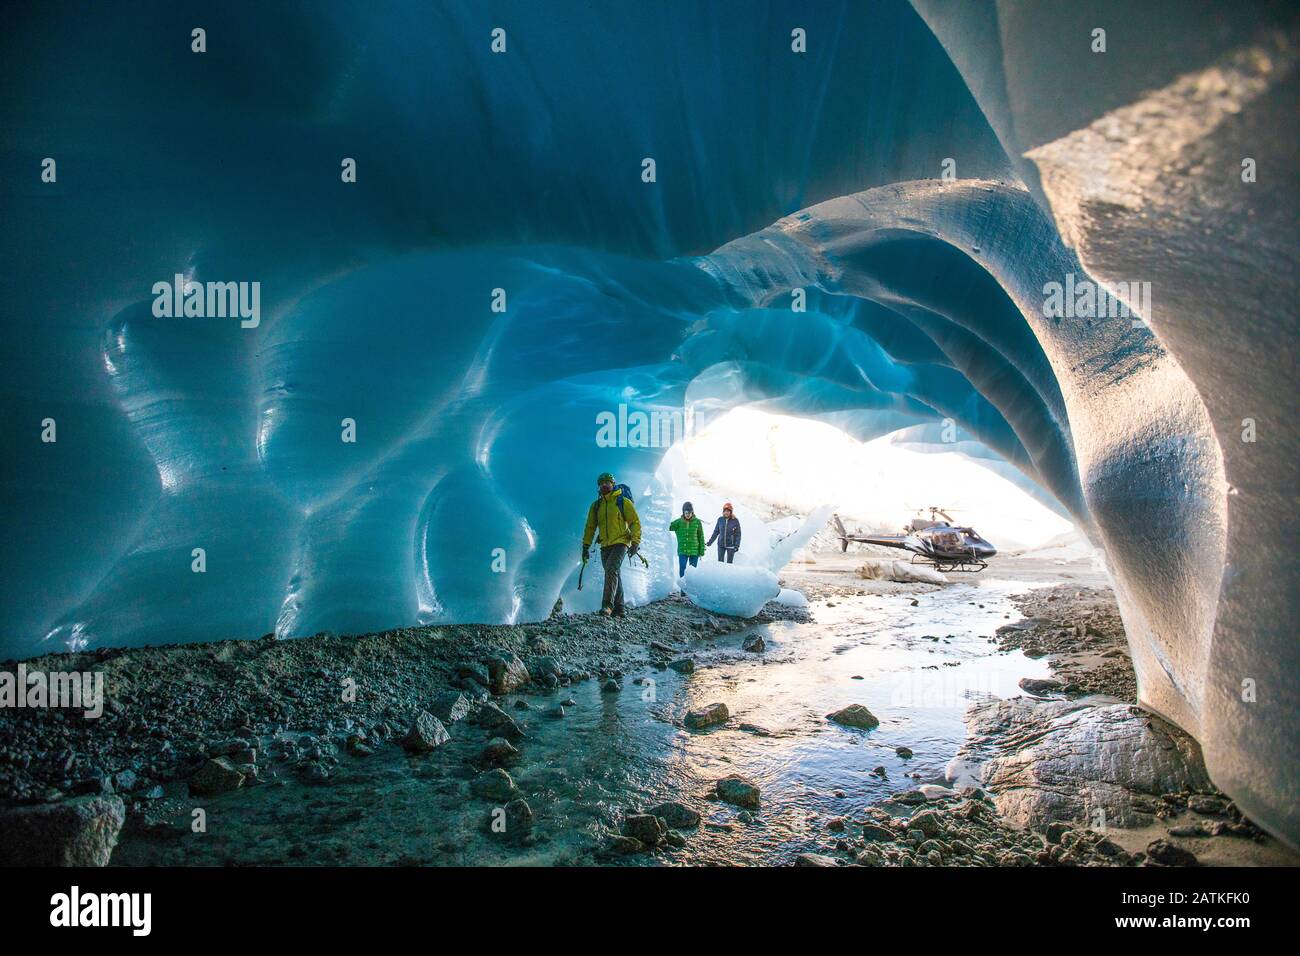 Three ice climbers enter a glacial cave. Stock Photo